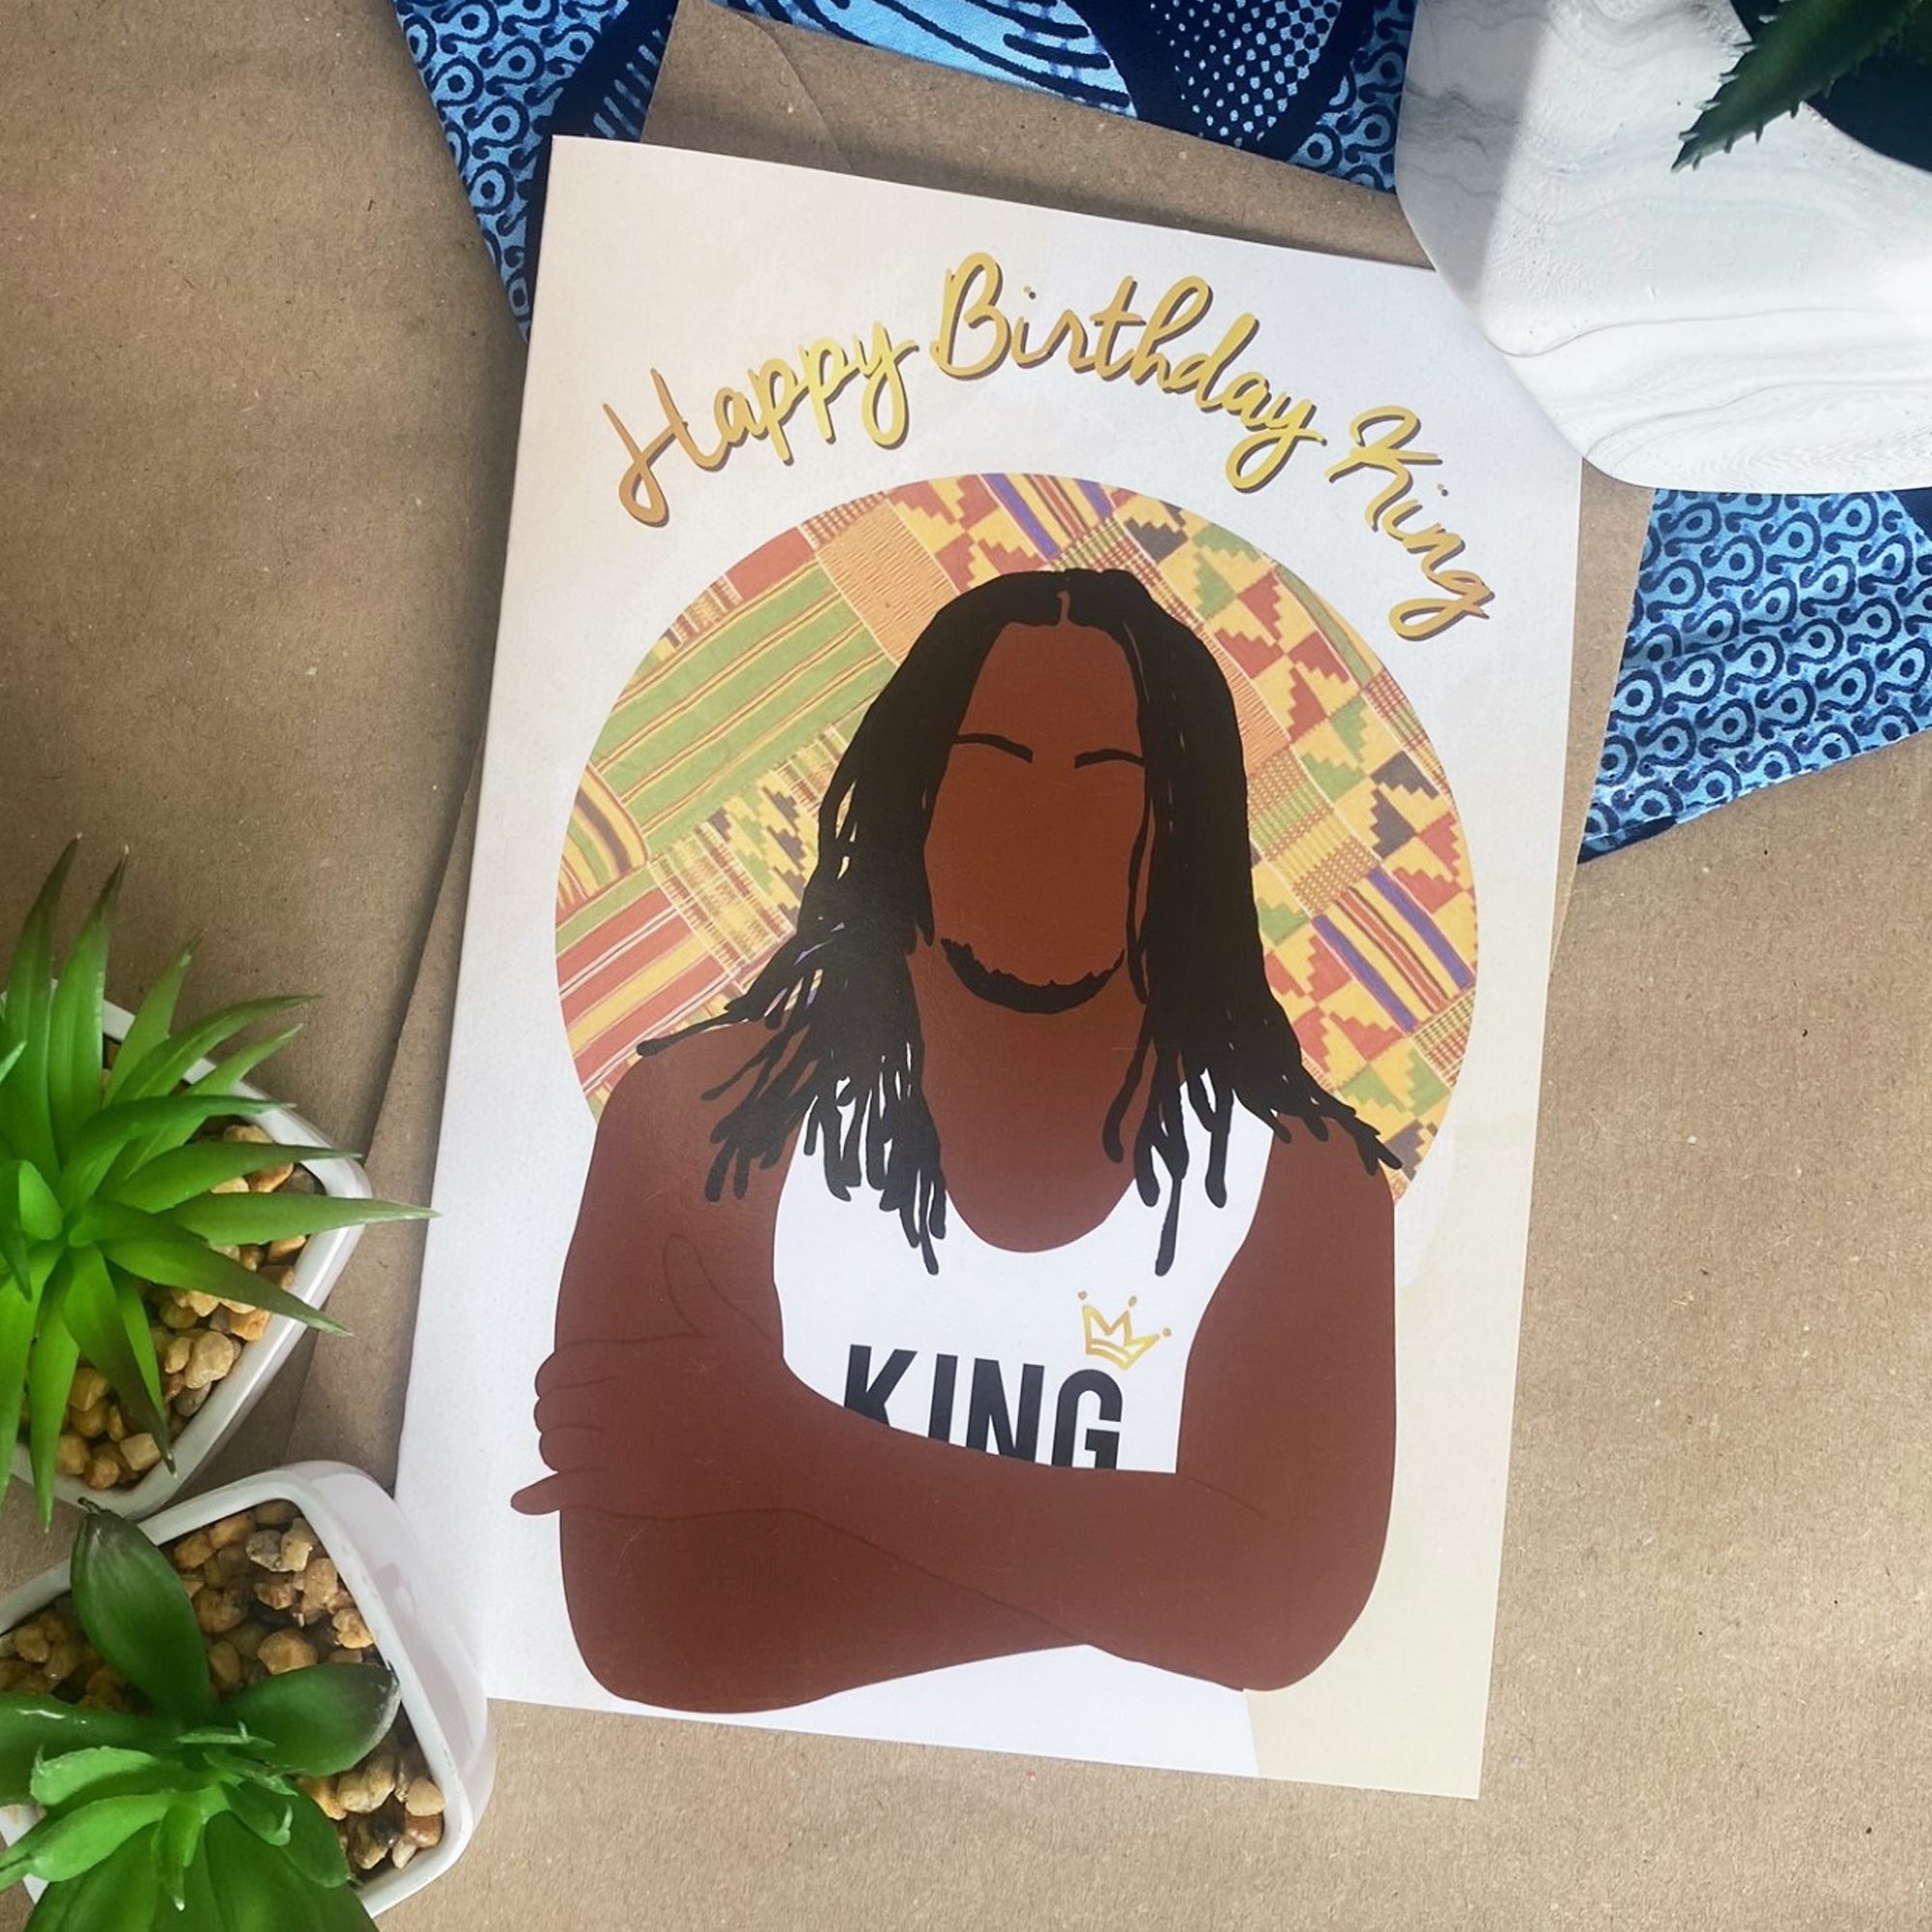 Black Man Birthday Card | Black Man with Dreads